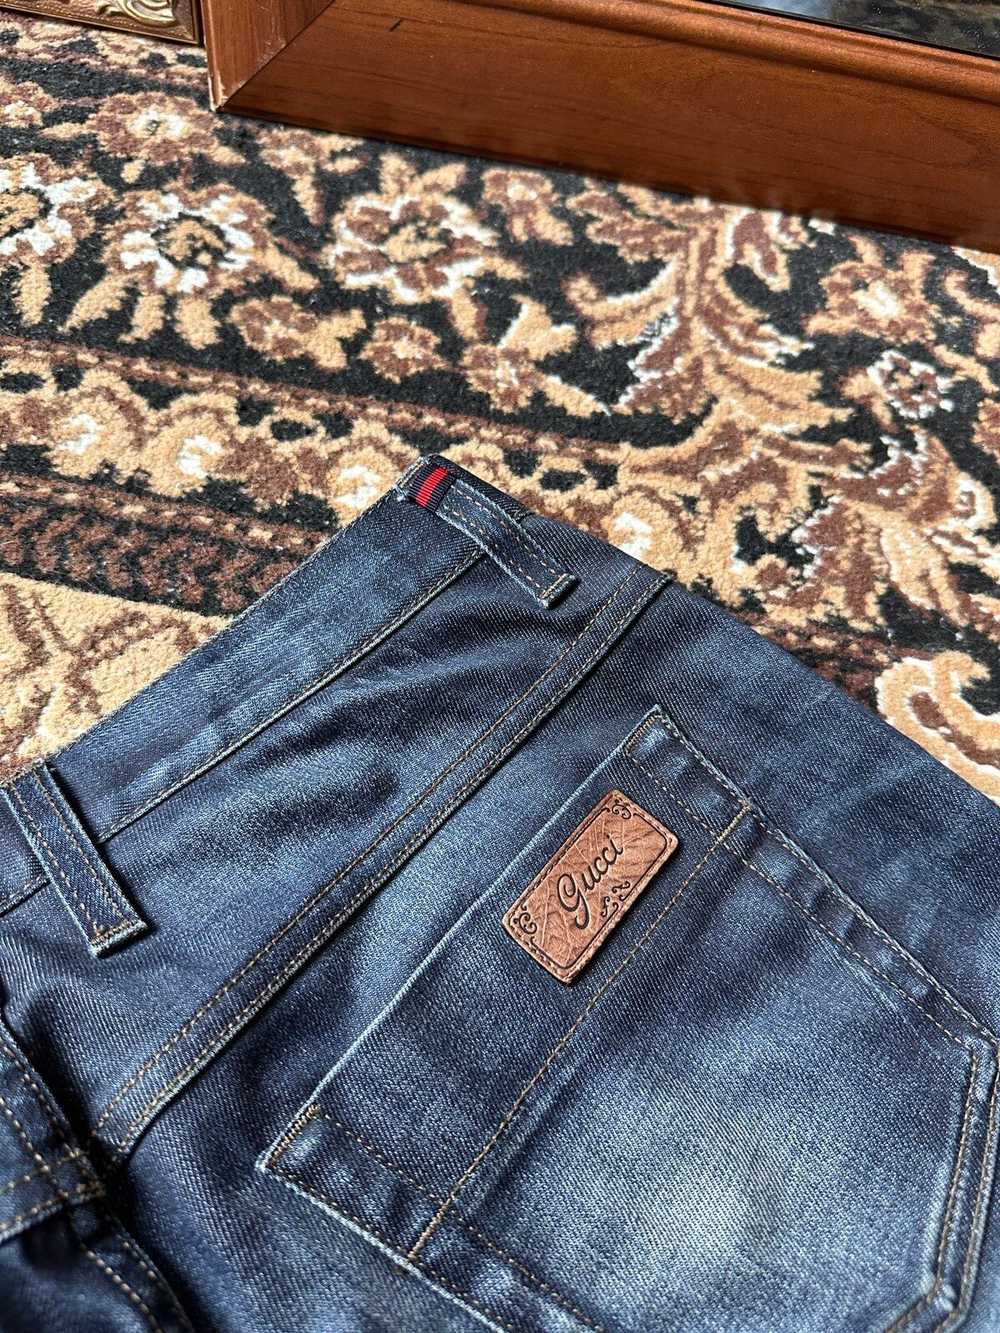 Gucci GUCCI denim LEATHER Logo Jeans Pants - image 9